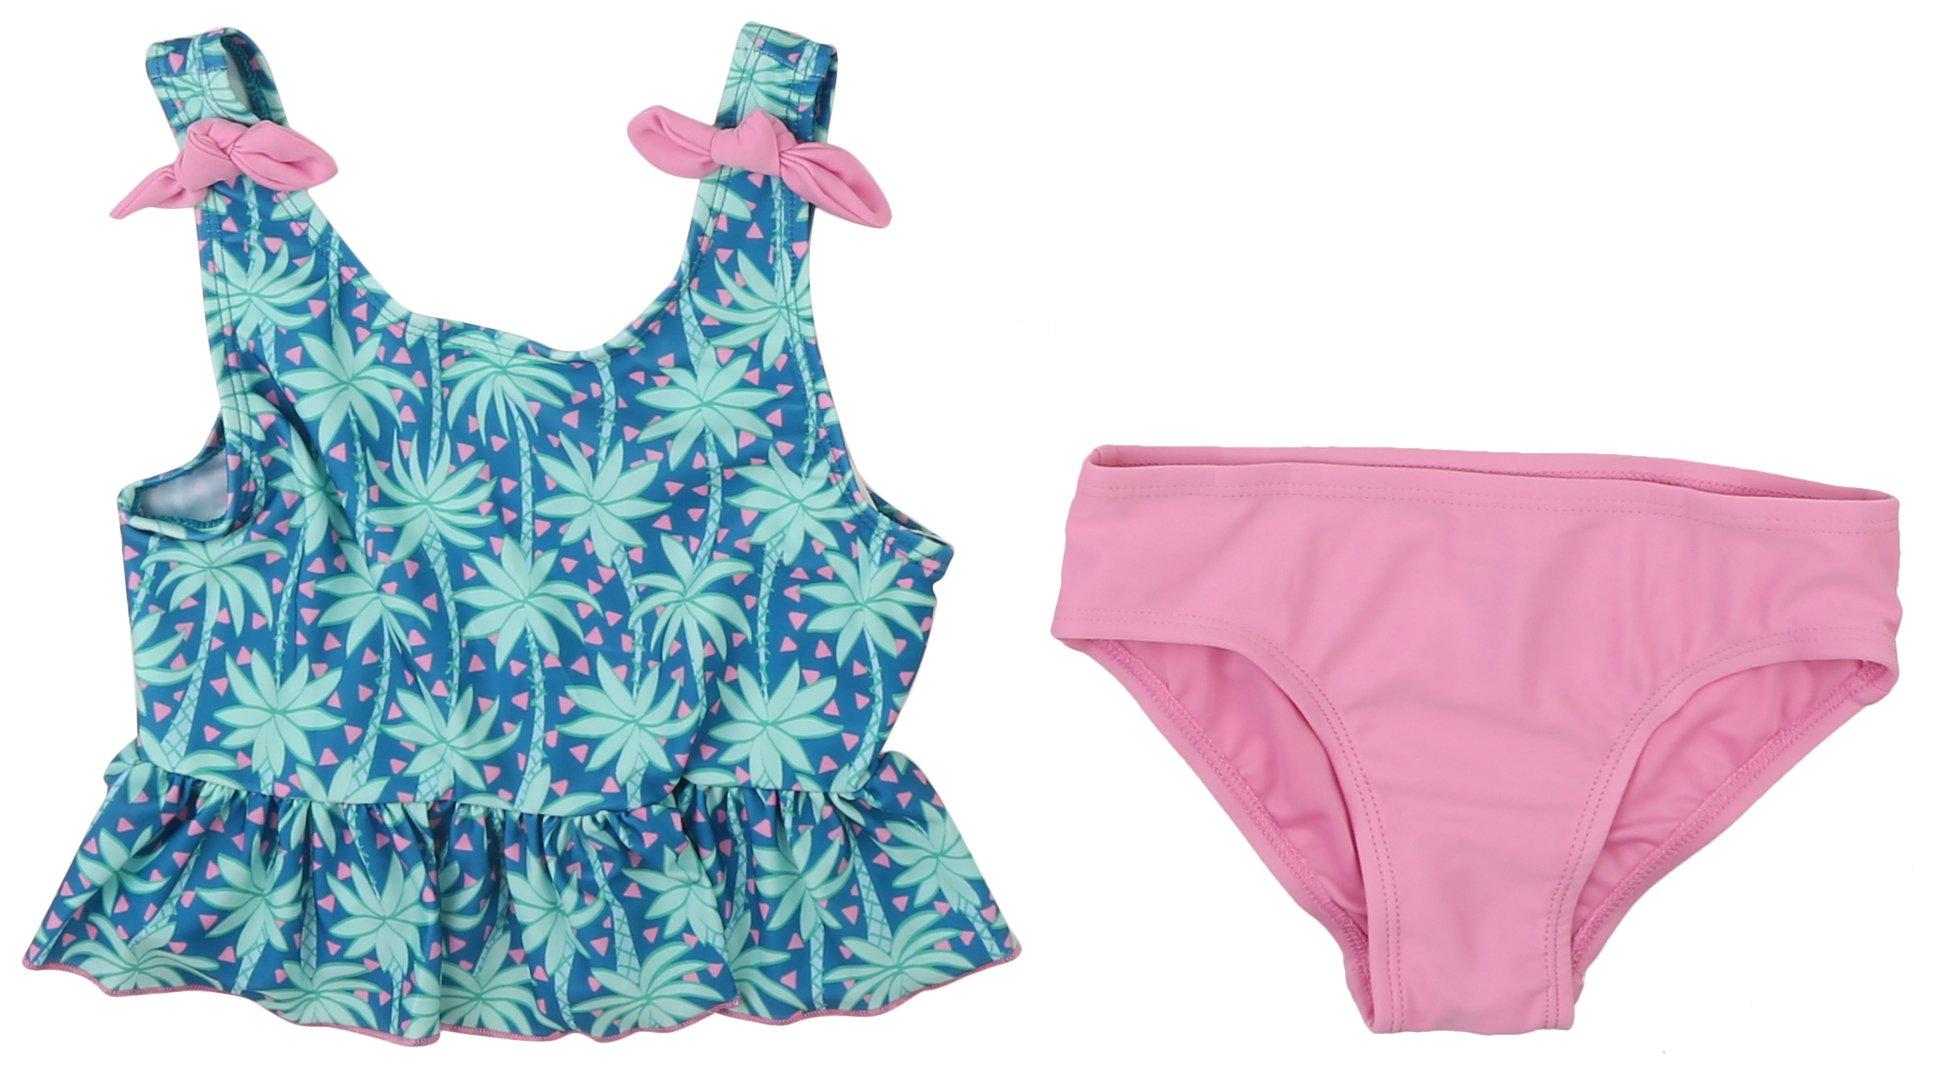 Little Girls 2-pc. Palm Trees Swimsuit Set